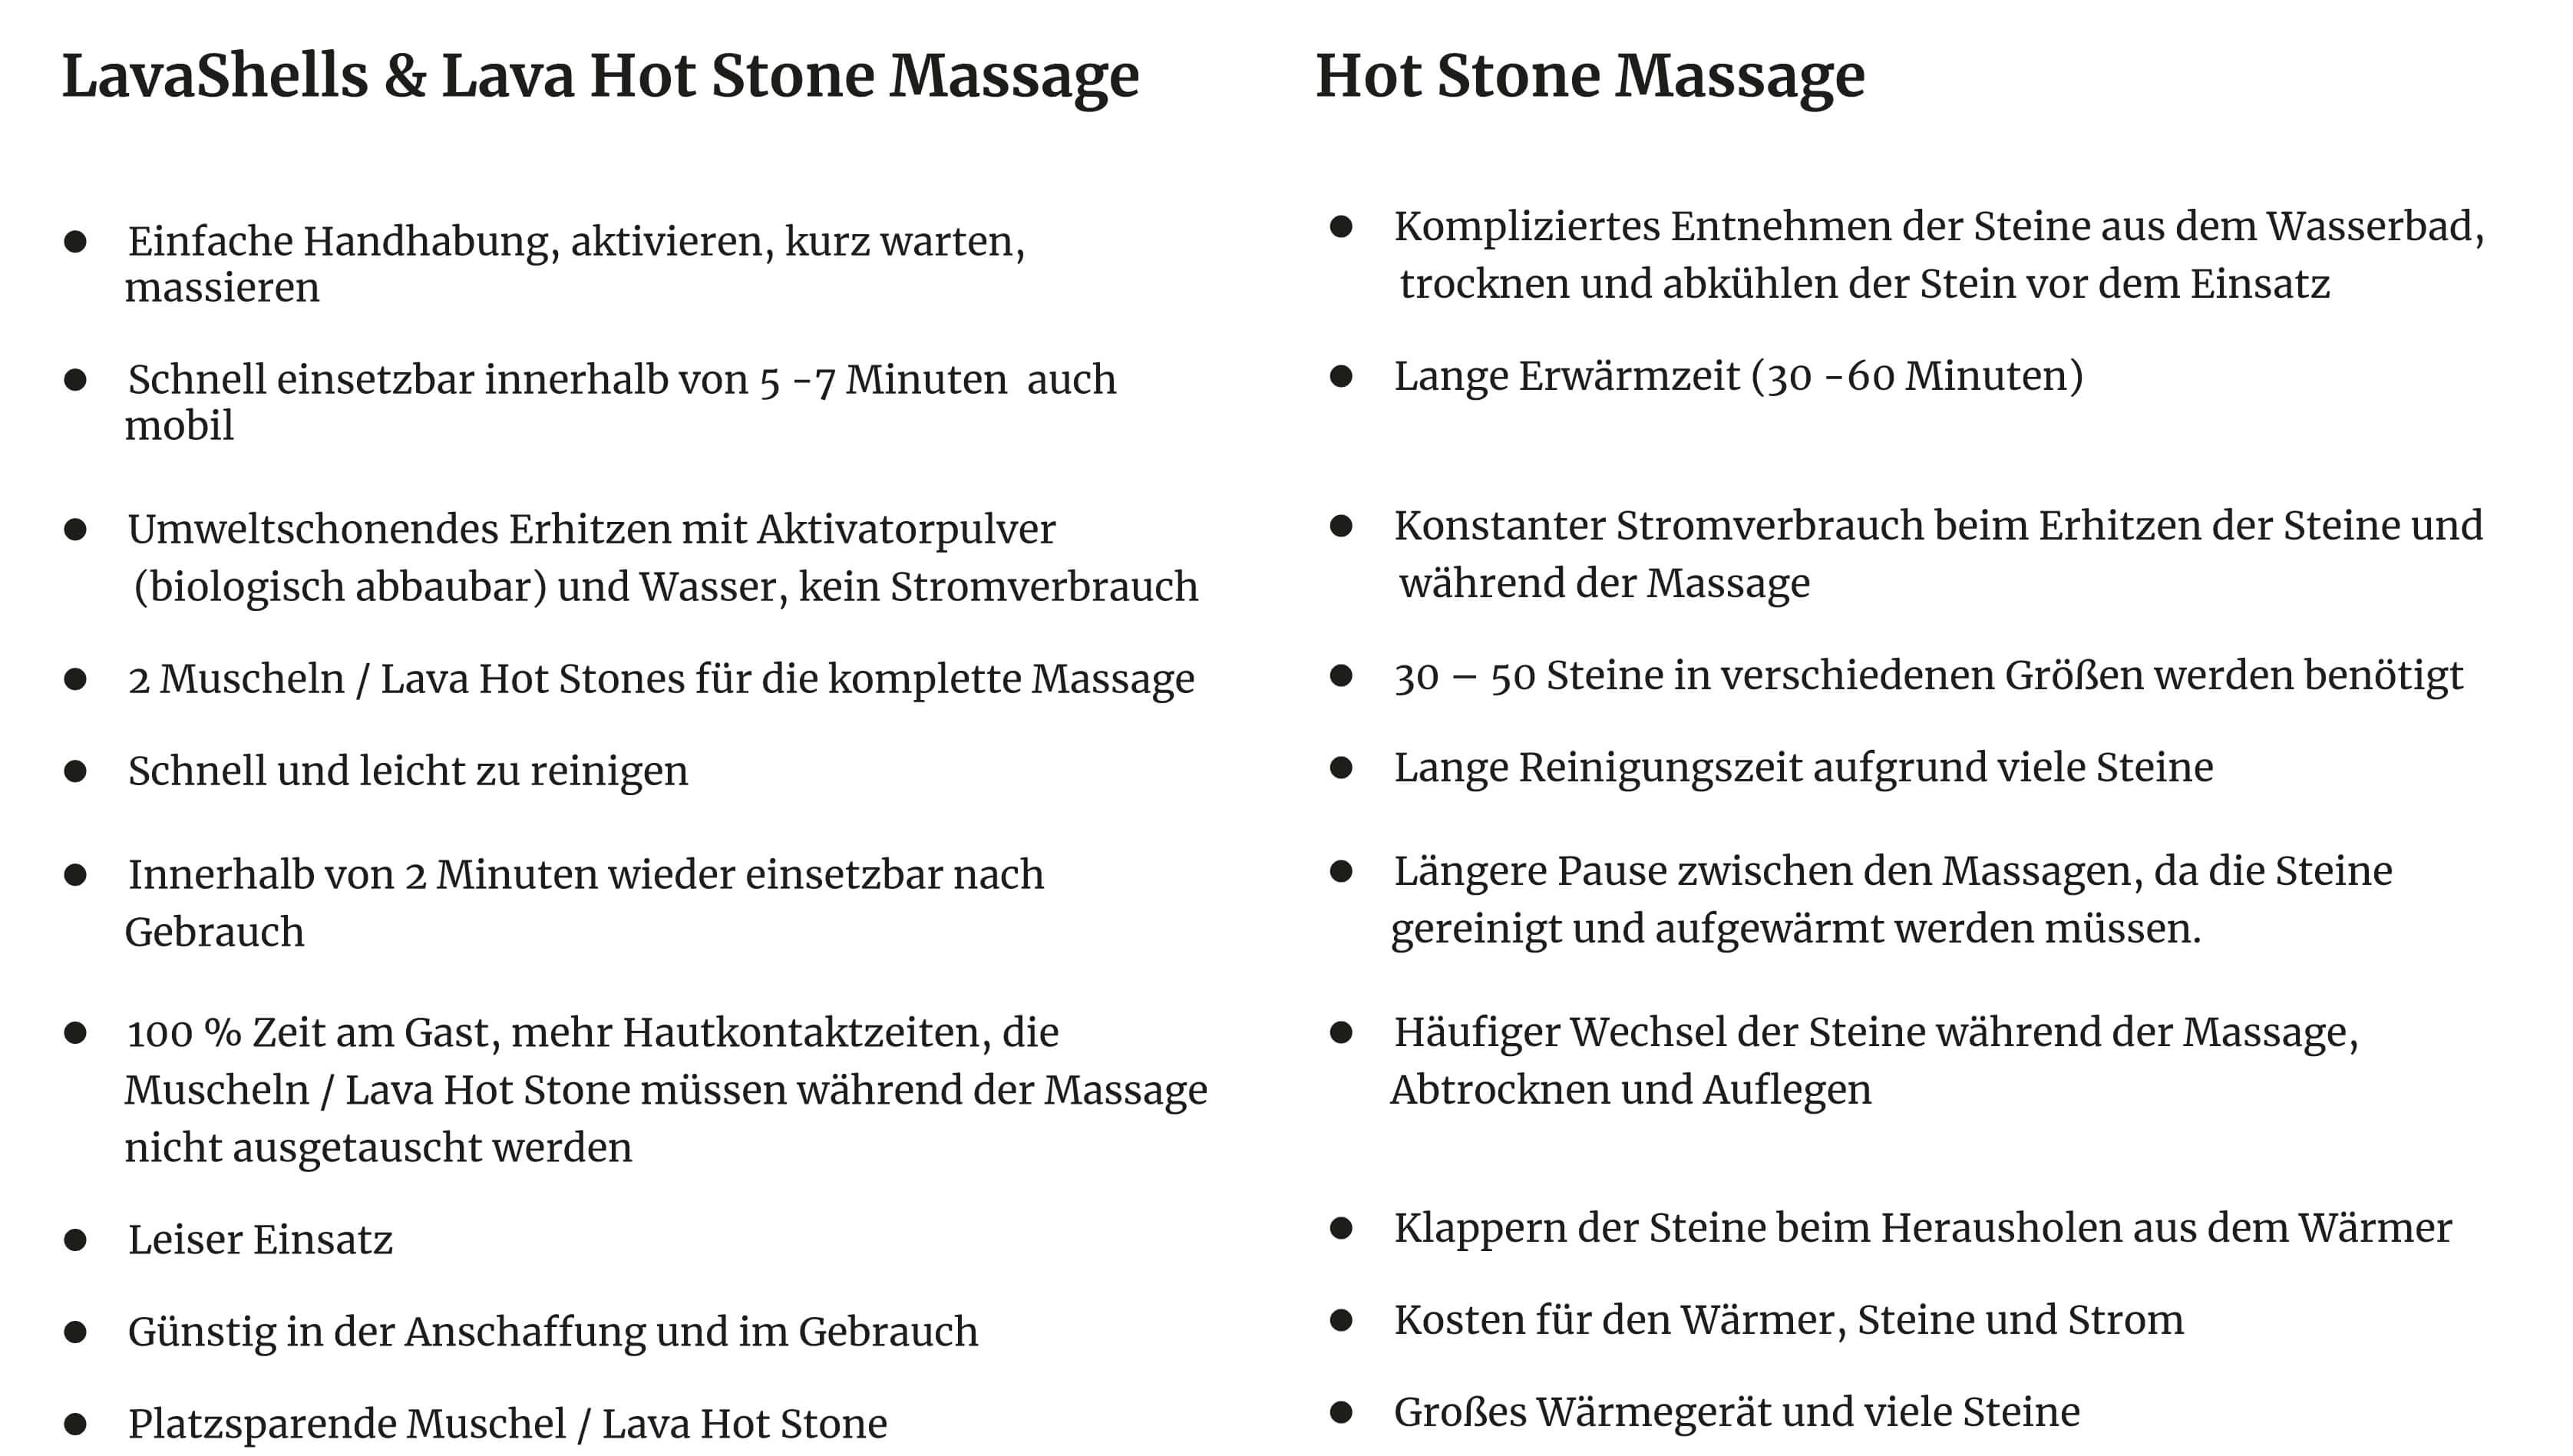 LavaShell versus Hot Stone Massage